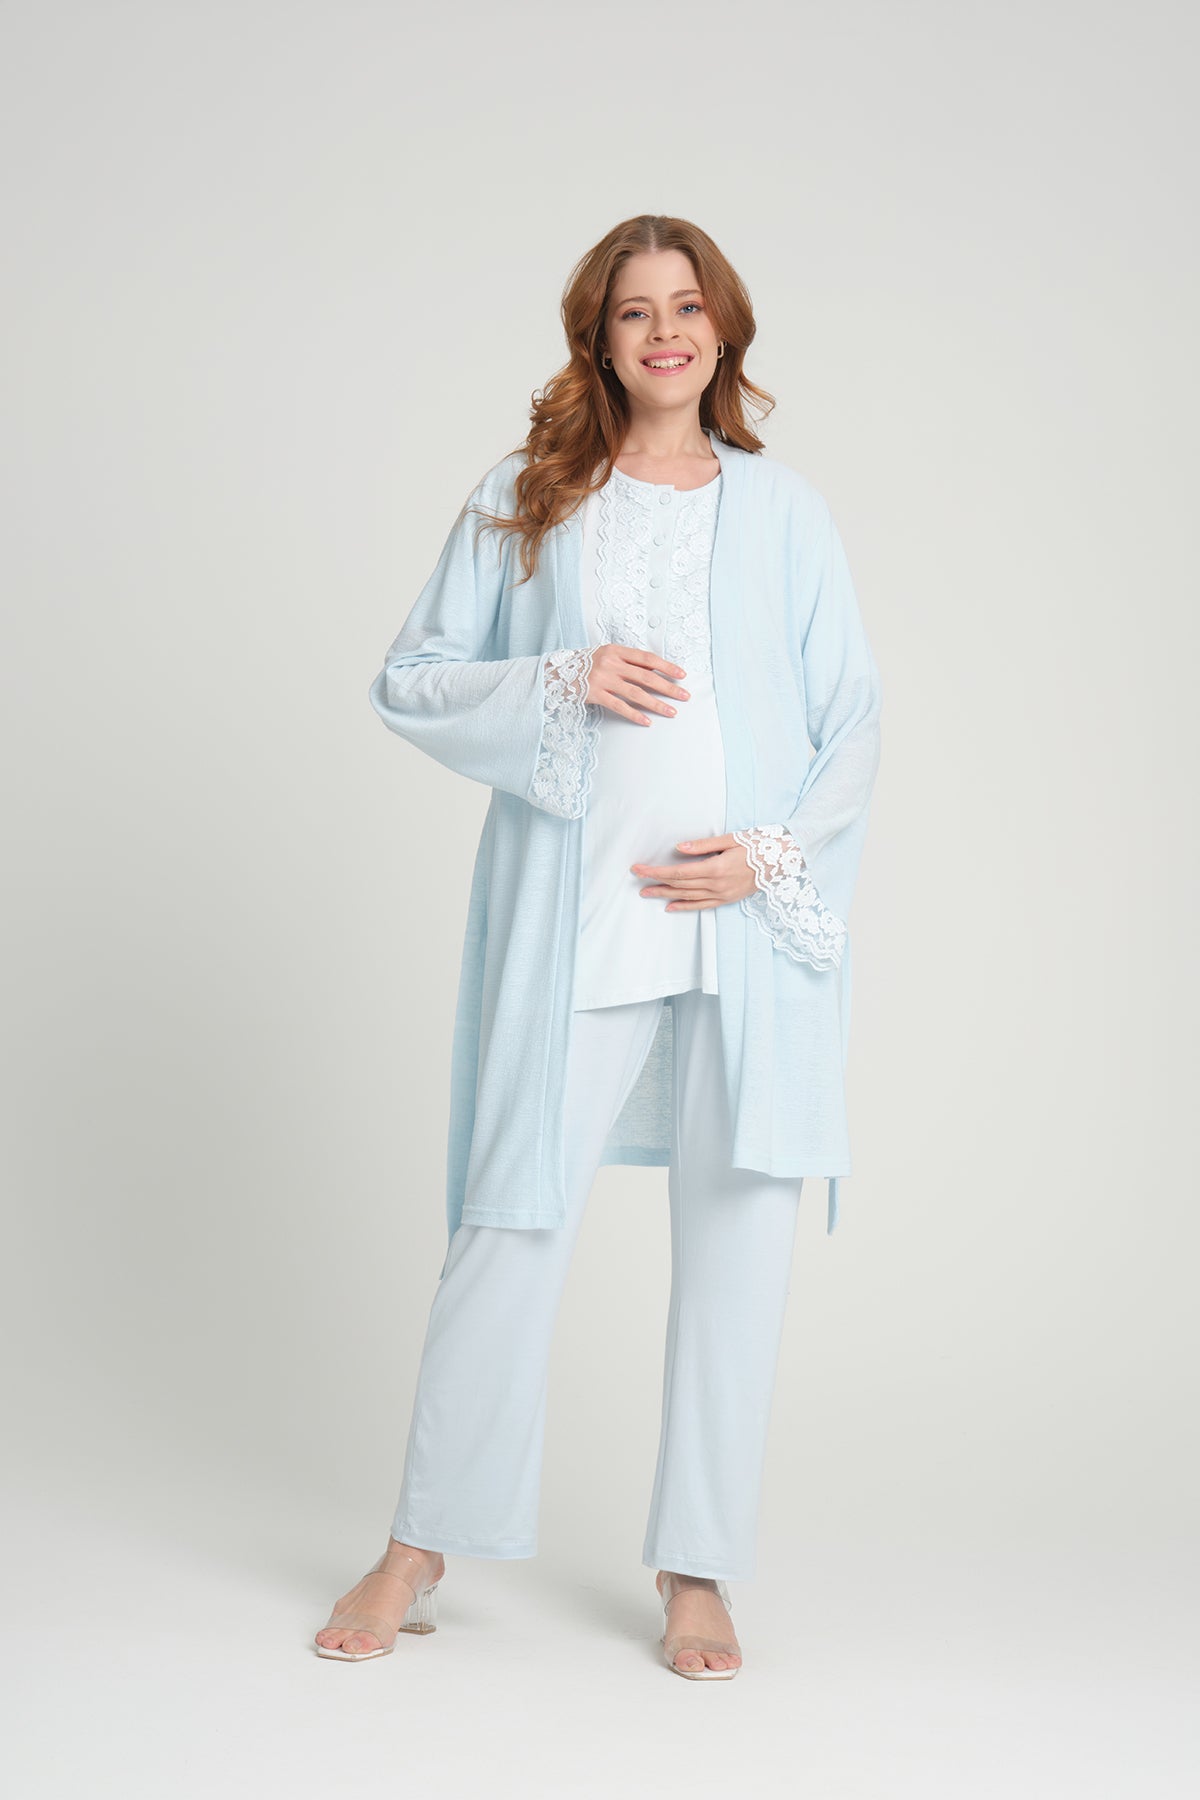 Lace Detailed 3-Pieces Maternity & Nursing Pajamas With Robe Blue - 209